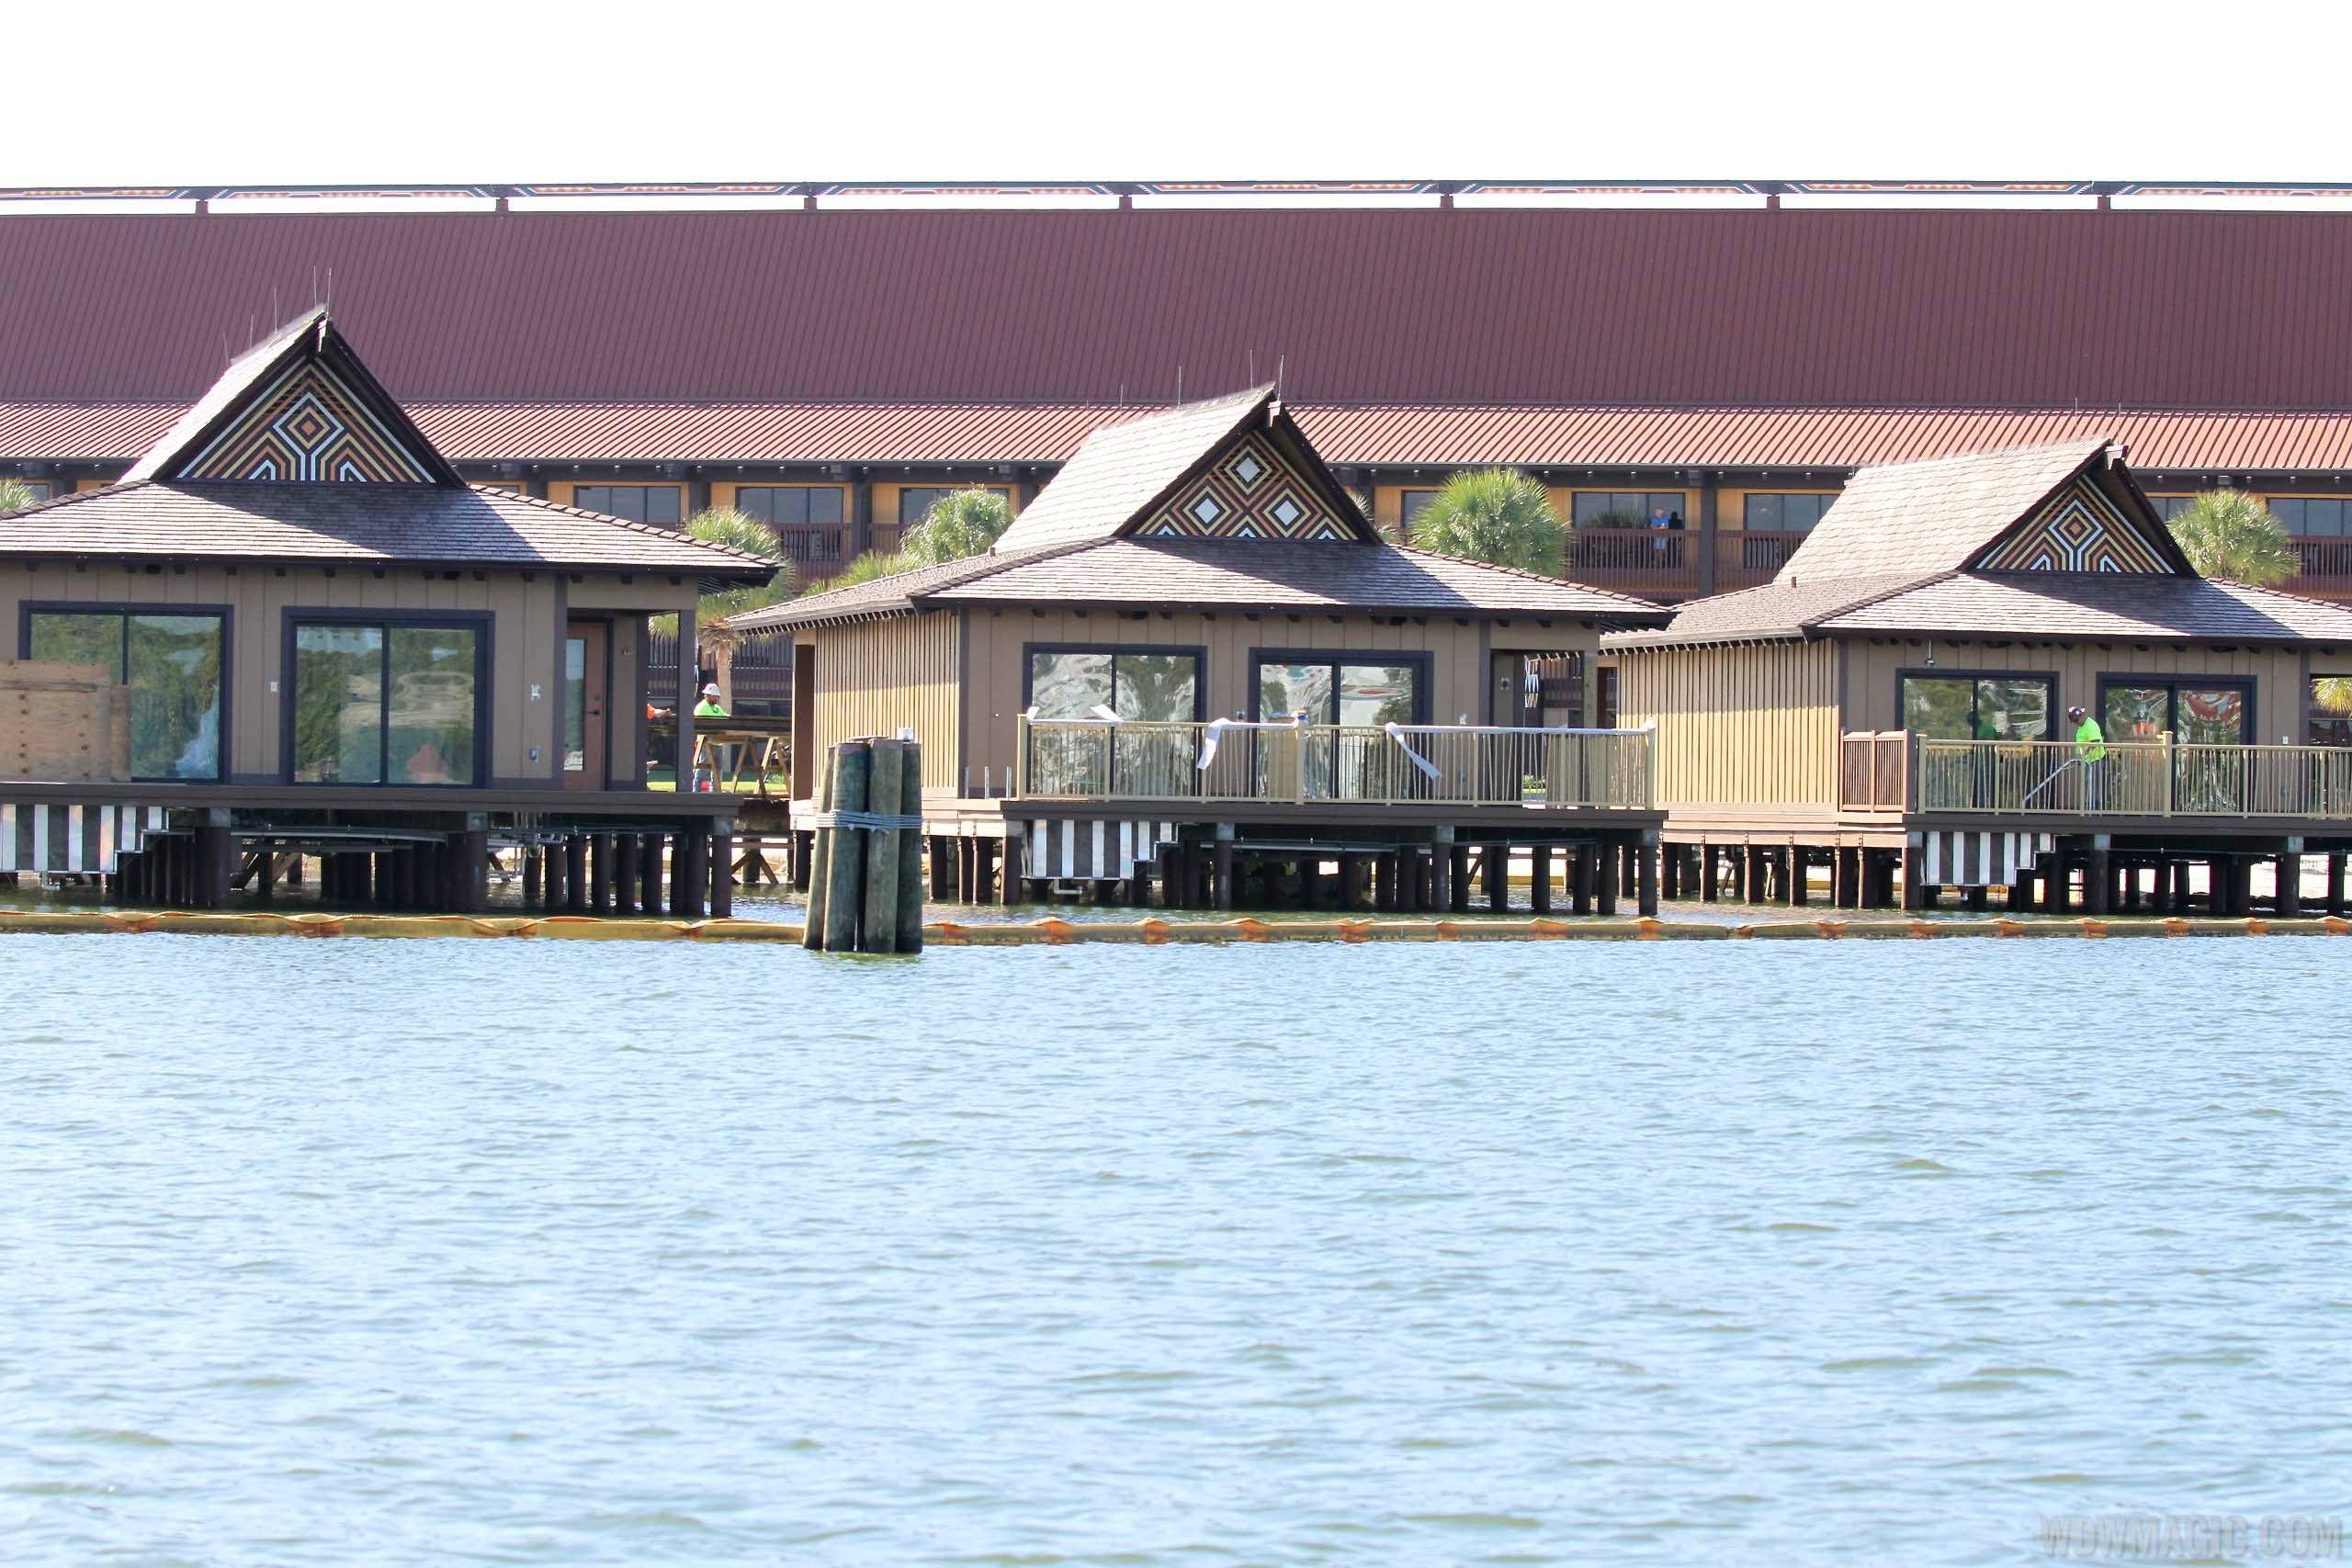 PHOTOS - The lagoon villas under construction at Disney's Polynesian Village Resort